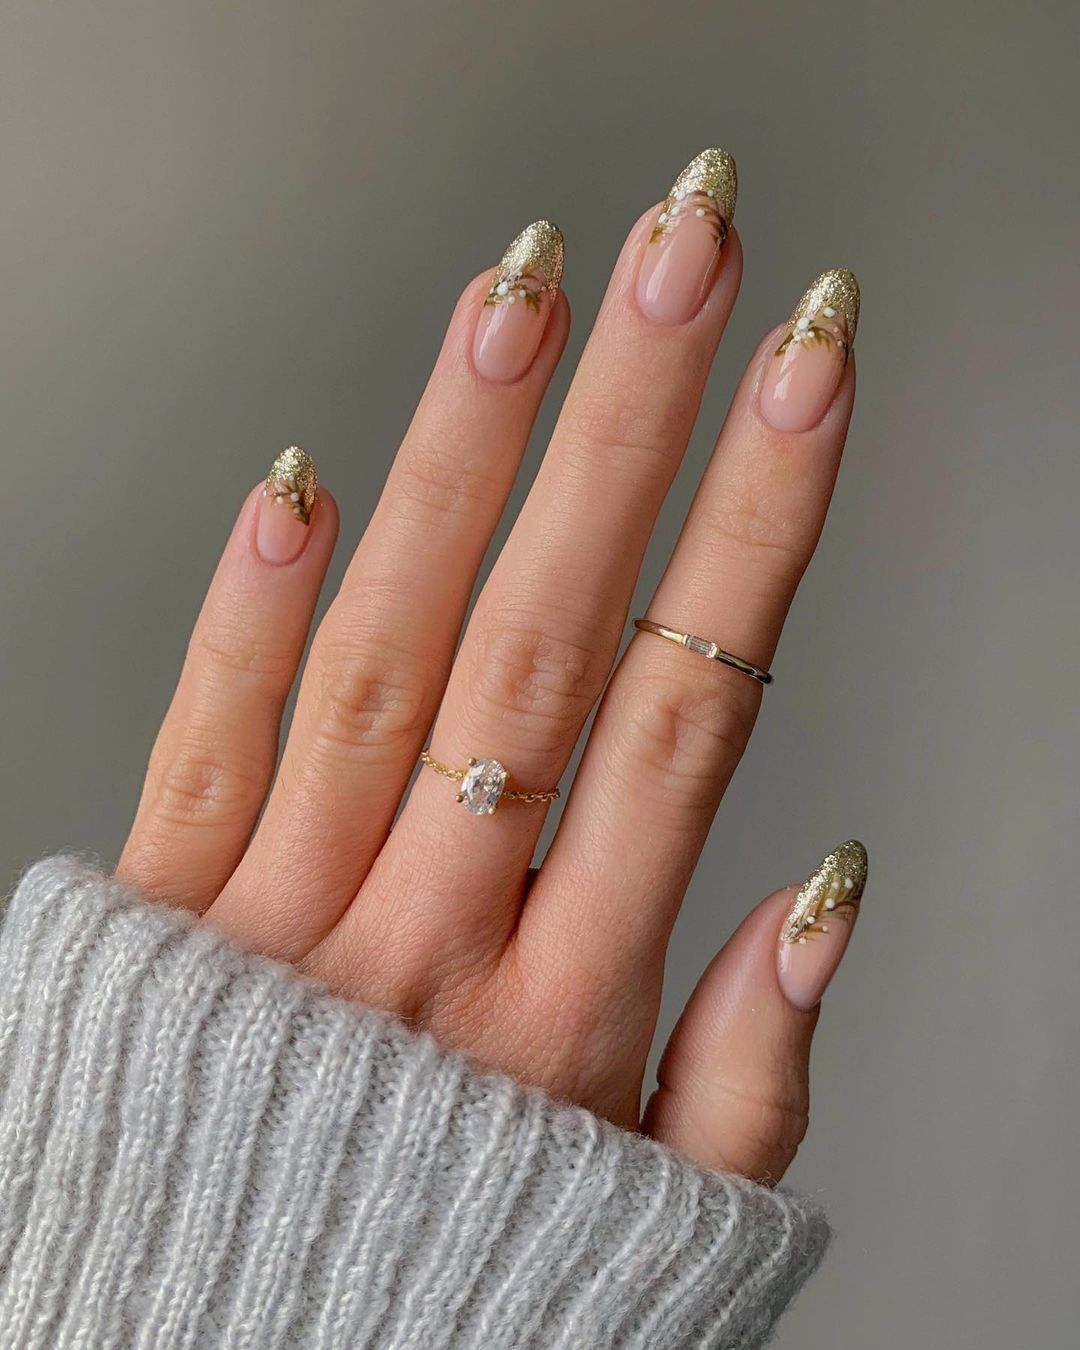 Floral nail art designs perfect for anyone with short nails :::MissKyra